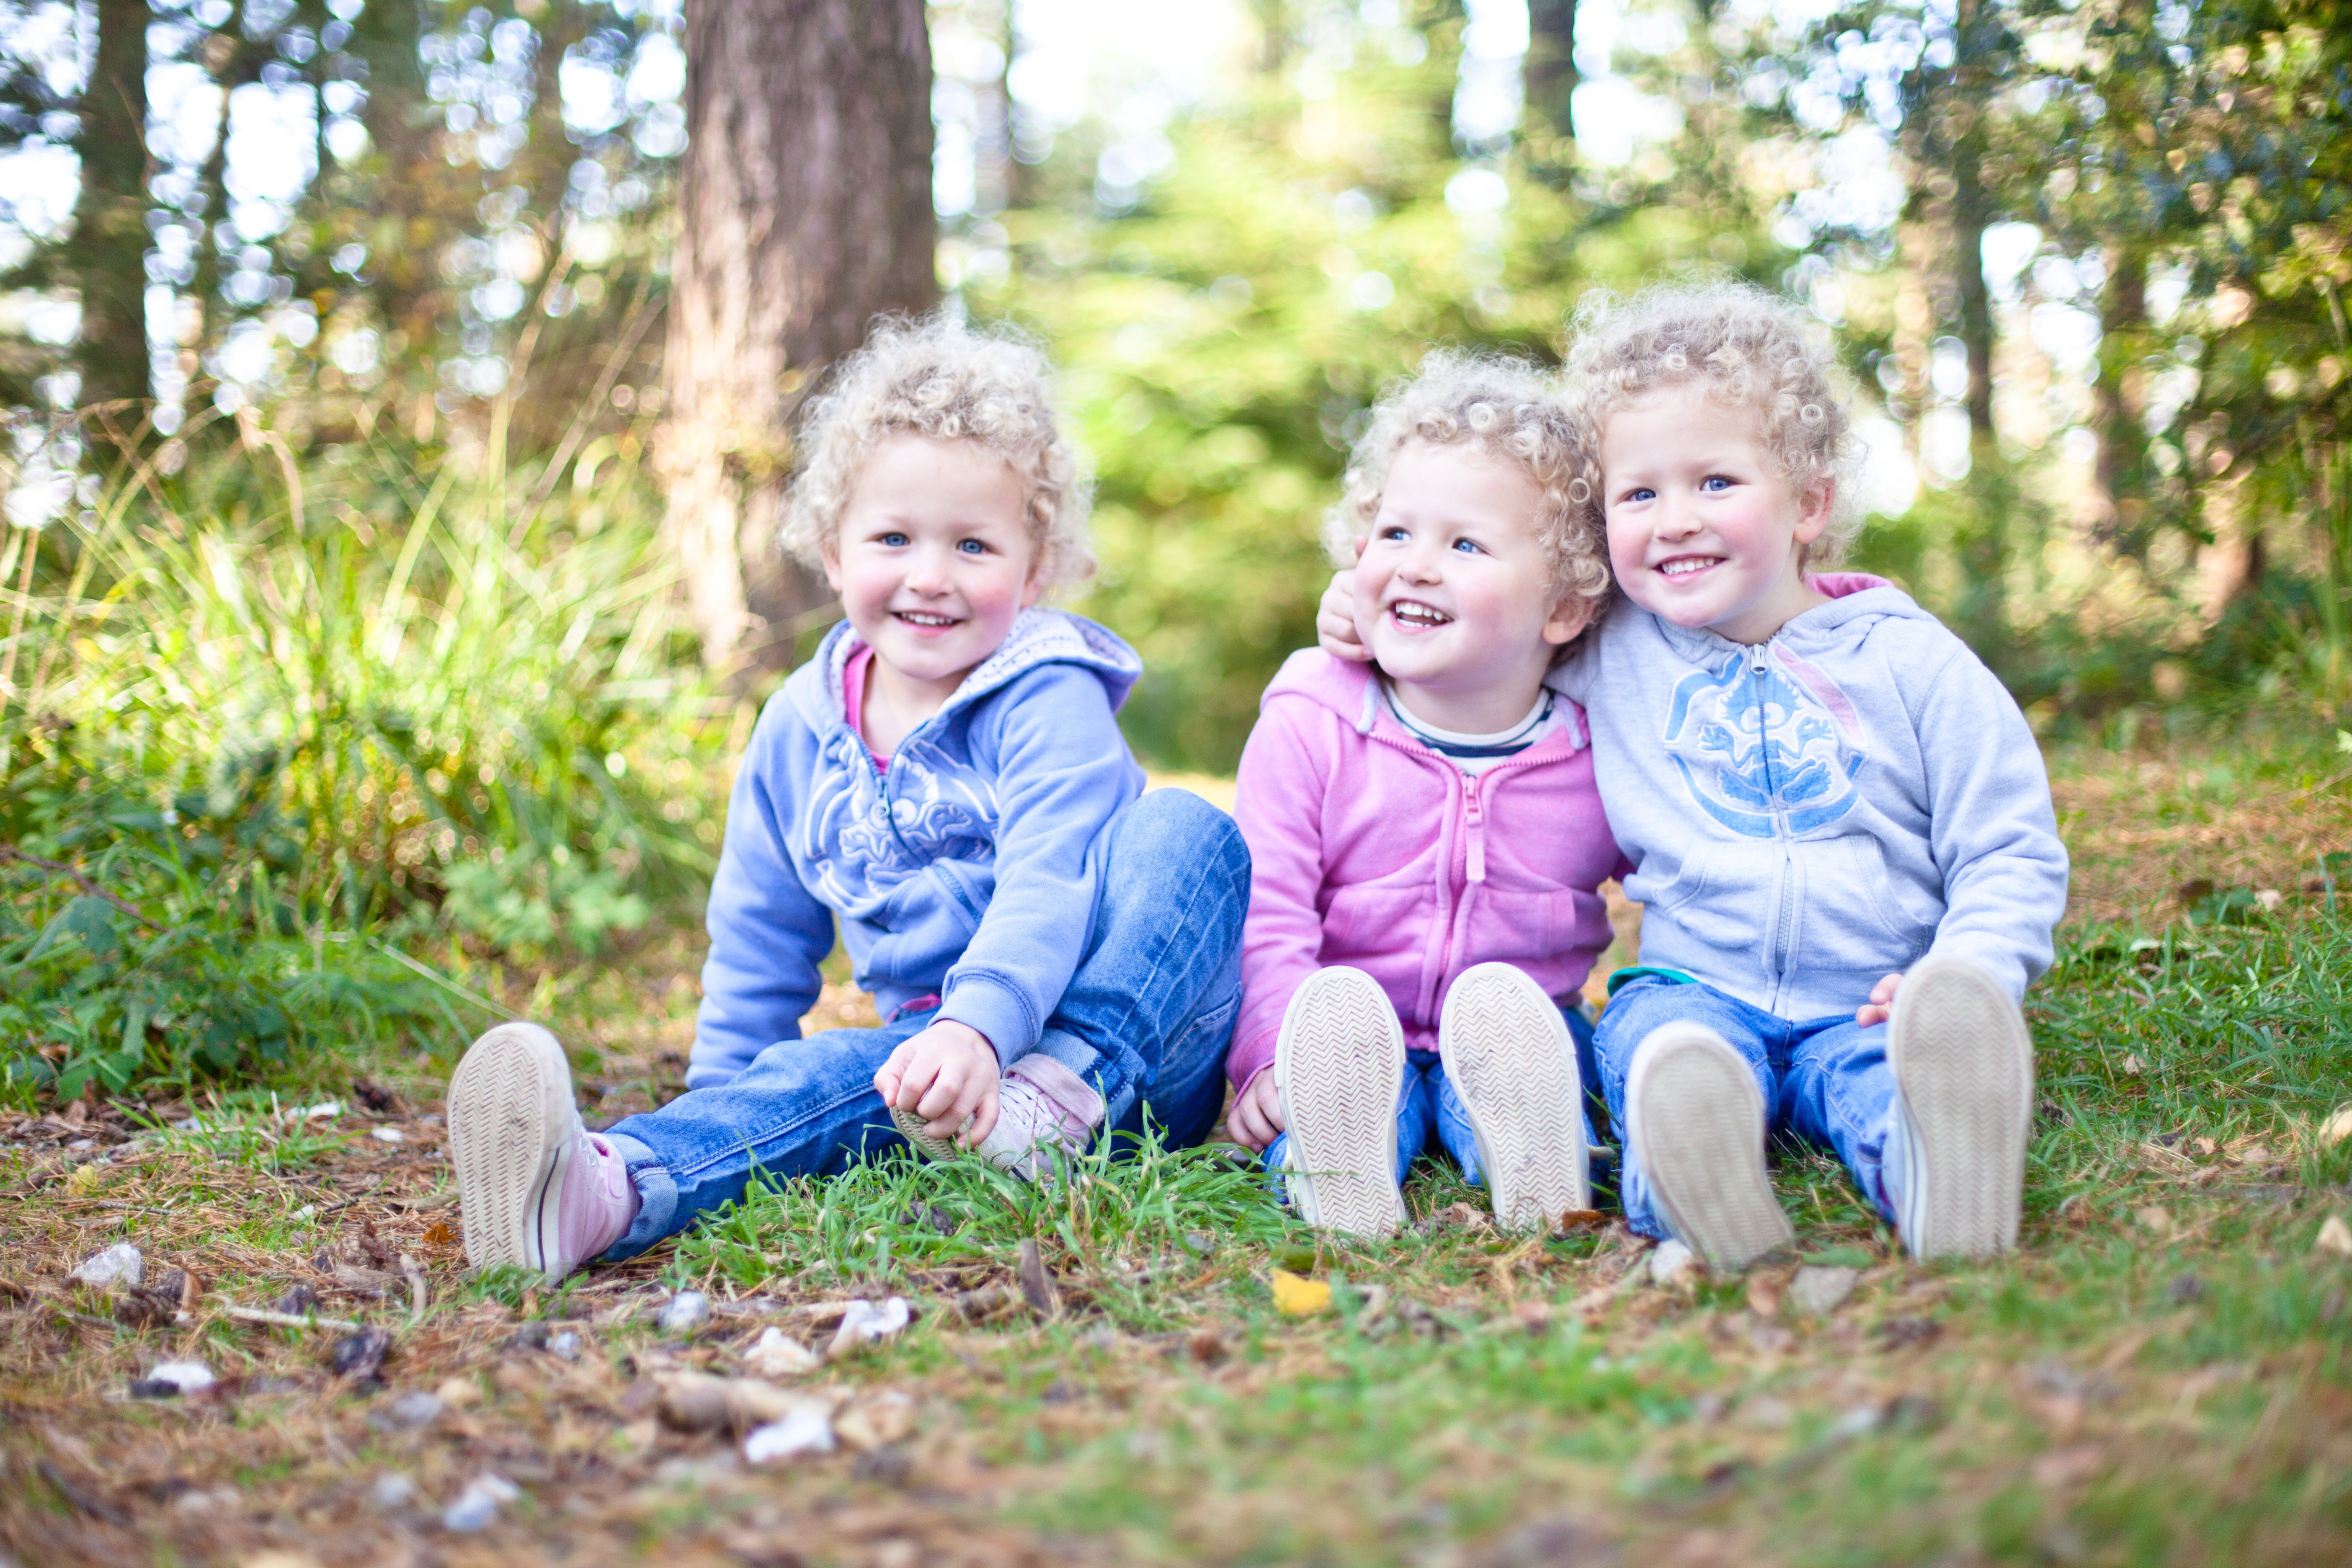 Ella's triplets were a source of joy for Derek during his last few months. | Source: Rosie Parsons/Shutterstock